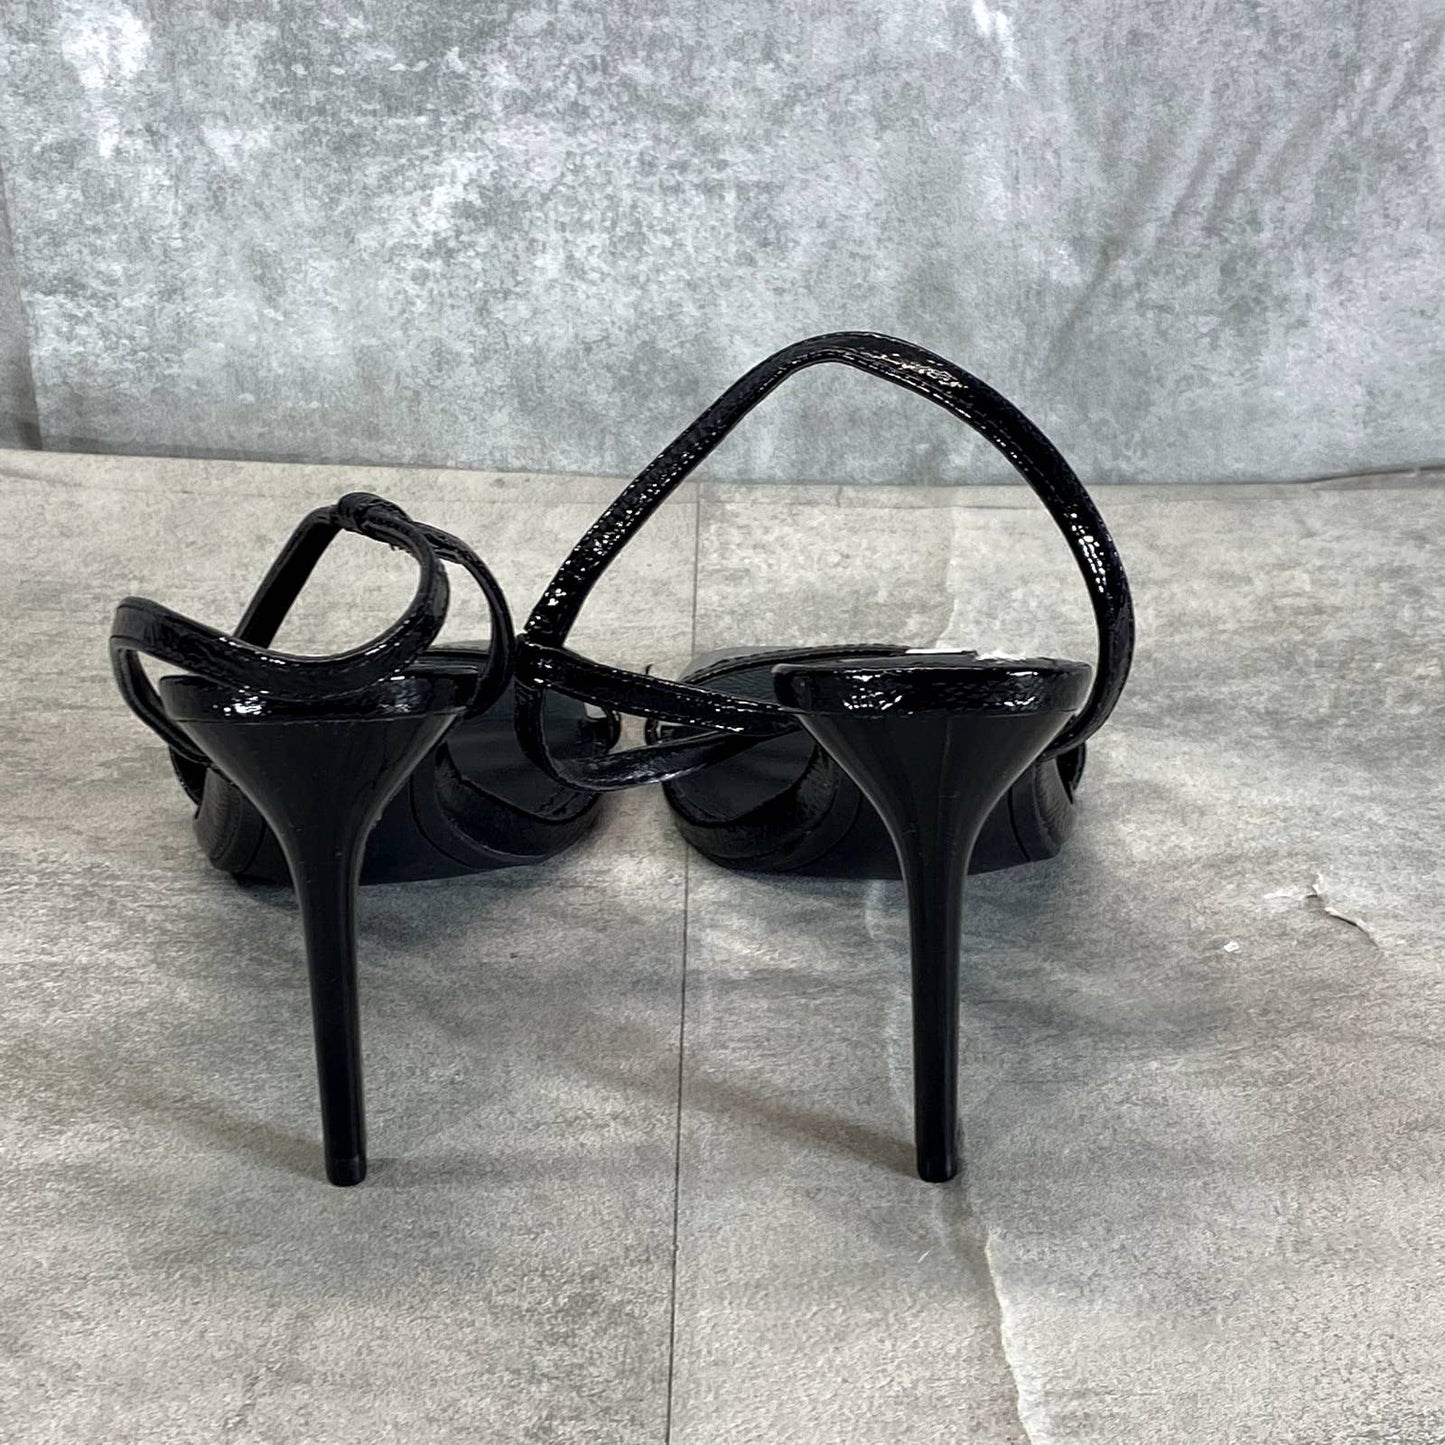 DKNY Women's Black Danielle Square-Toe Strappy Stiletto Dress Sandals SZ 7